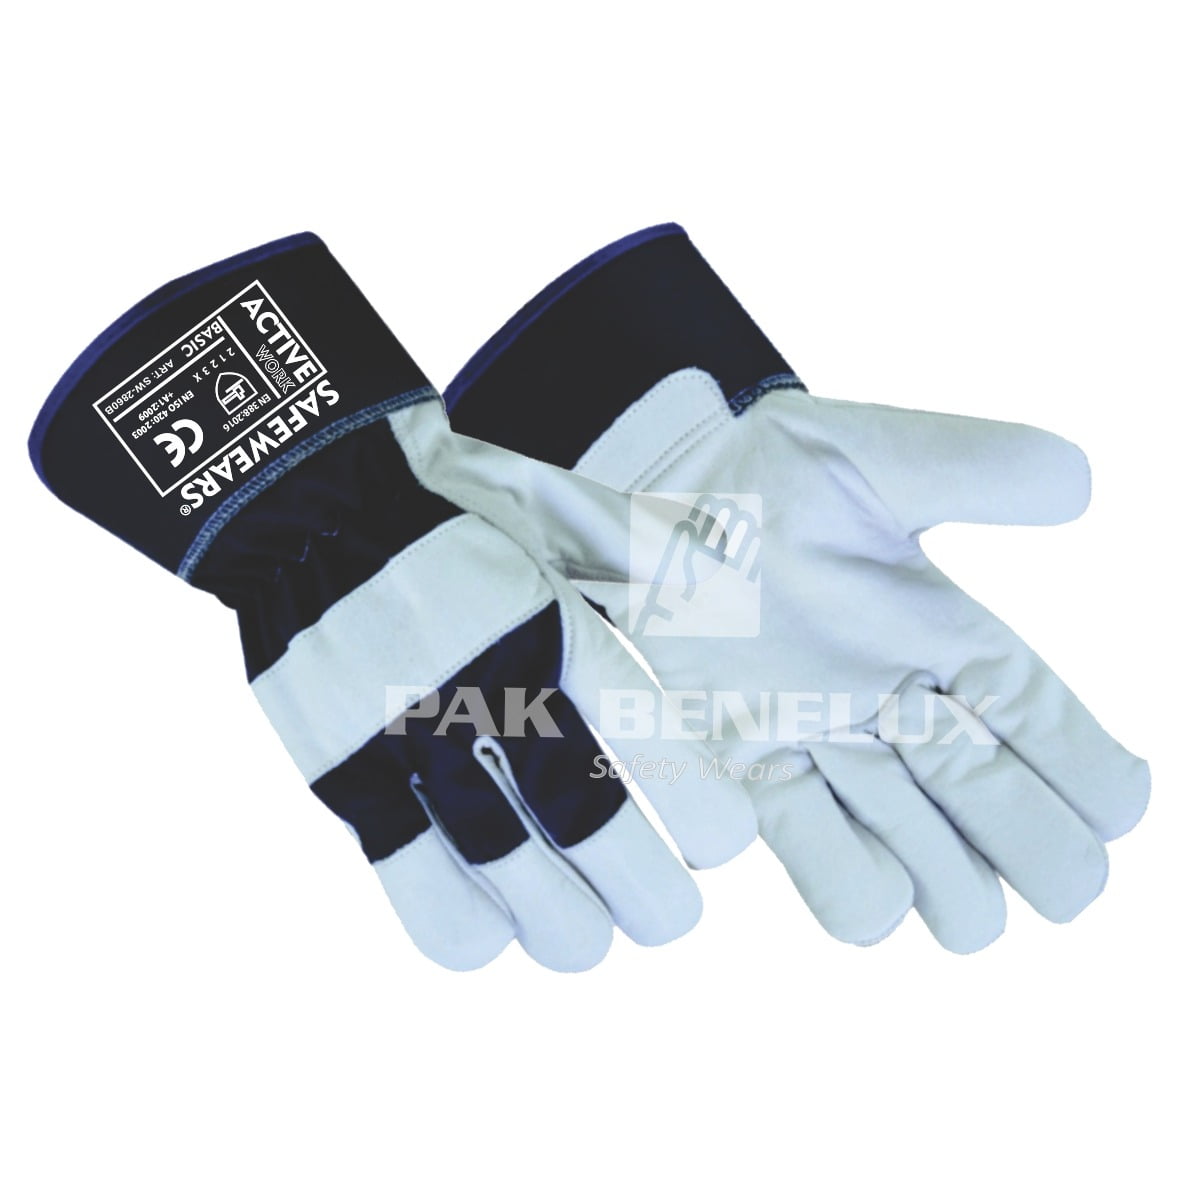 Work Gloves Manufacturer in Sialkot Pakistan